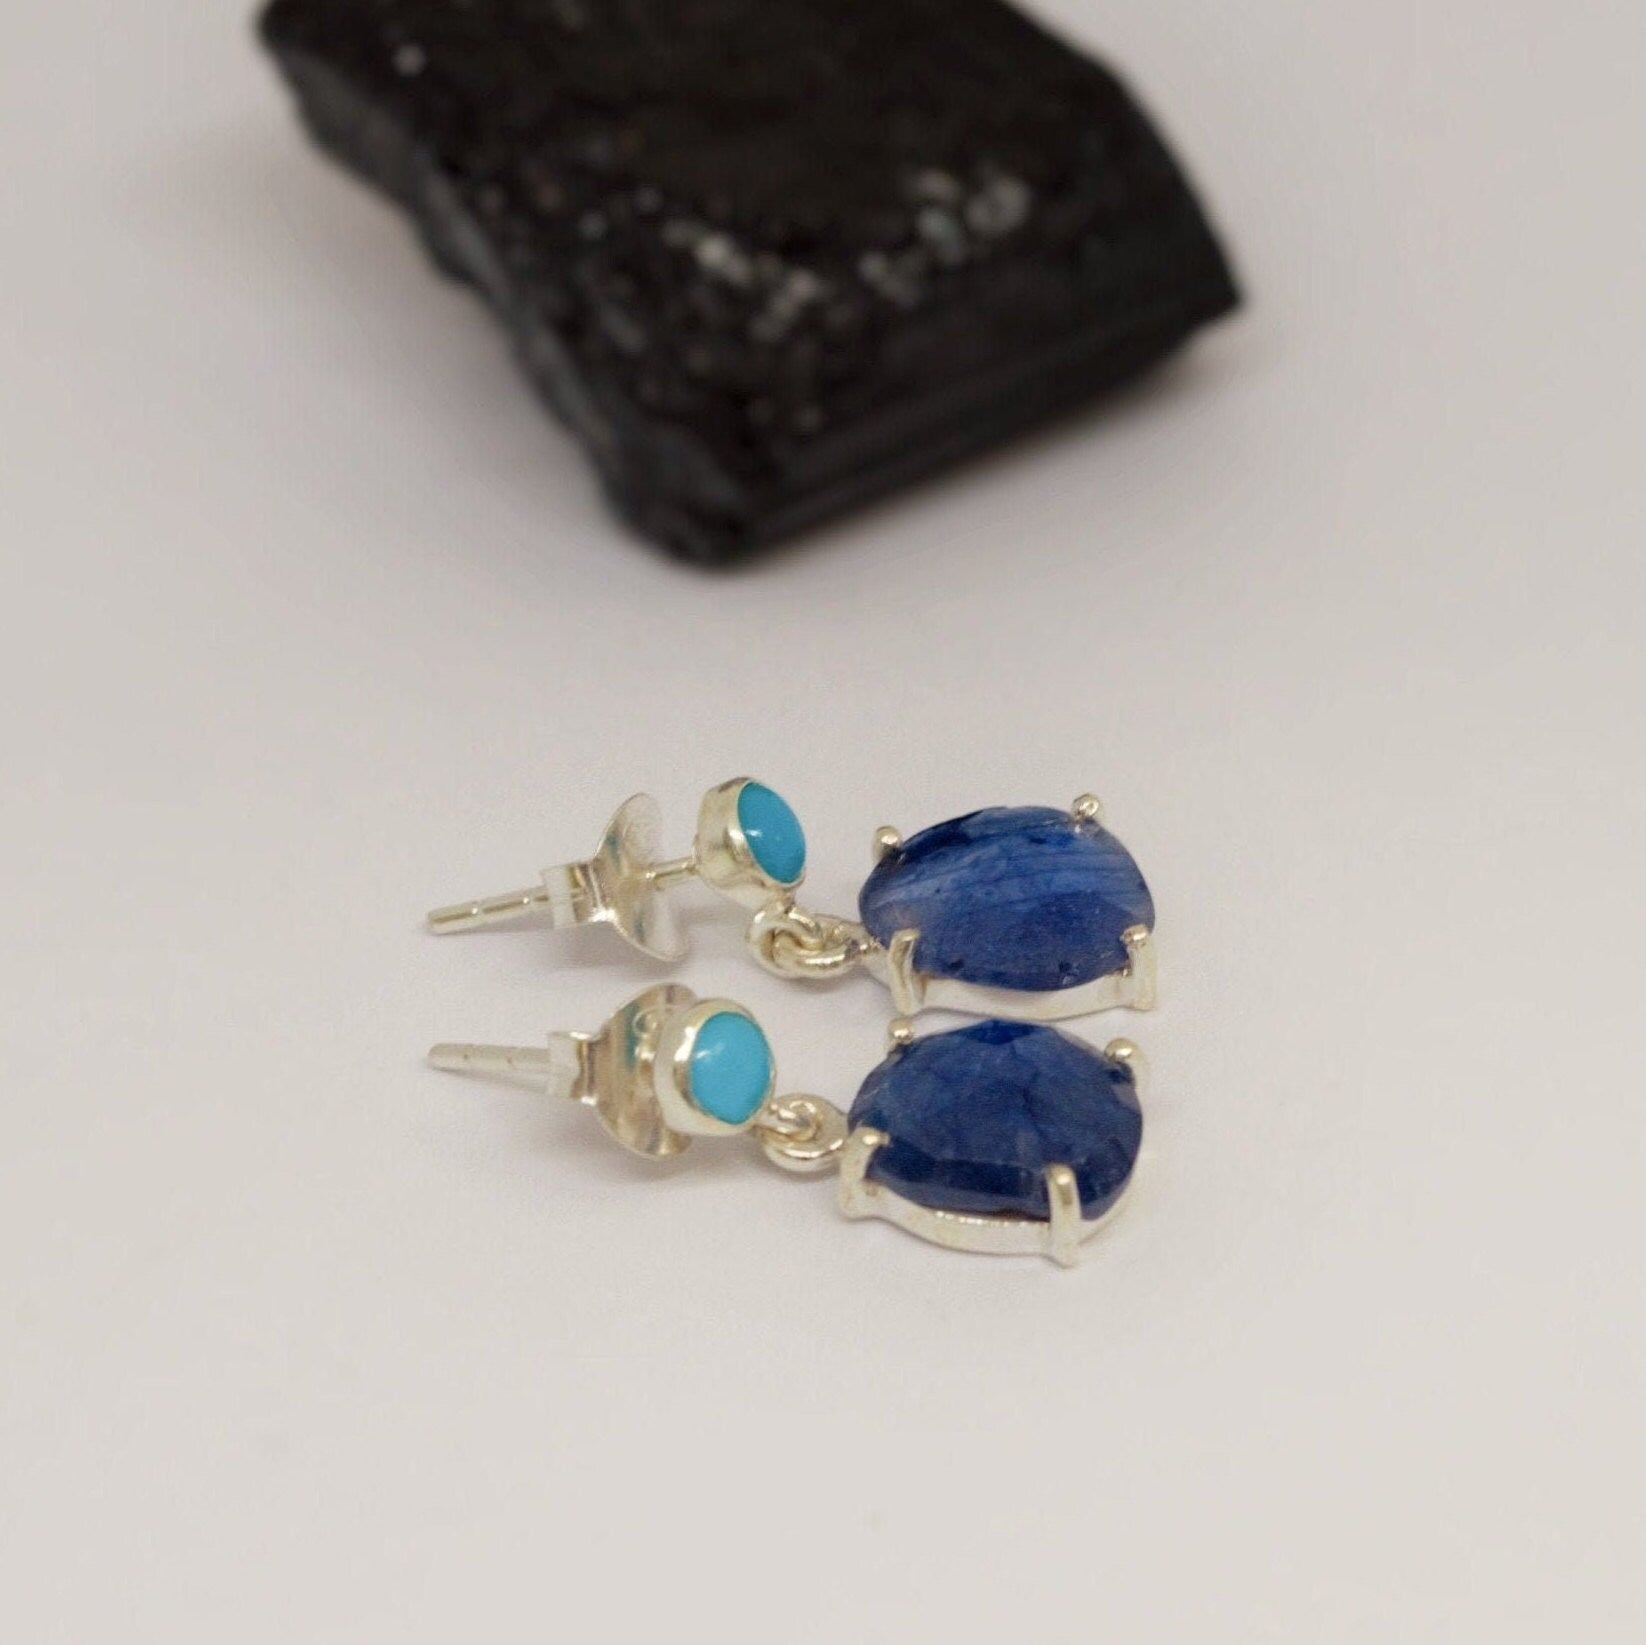 Blue Sapphire, Turquoise Earrings, Sterling Silver Teardrop Earrings, September, December Birthstone, Birthday Gift For Her, Cute Gemstone